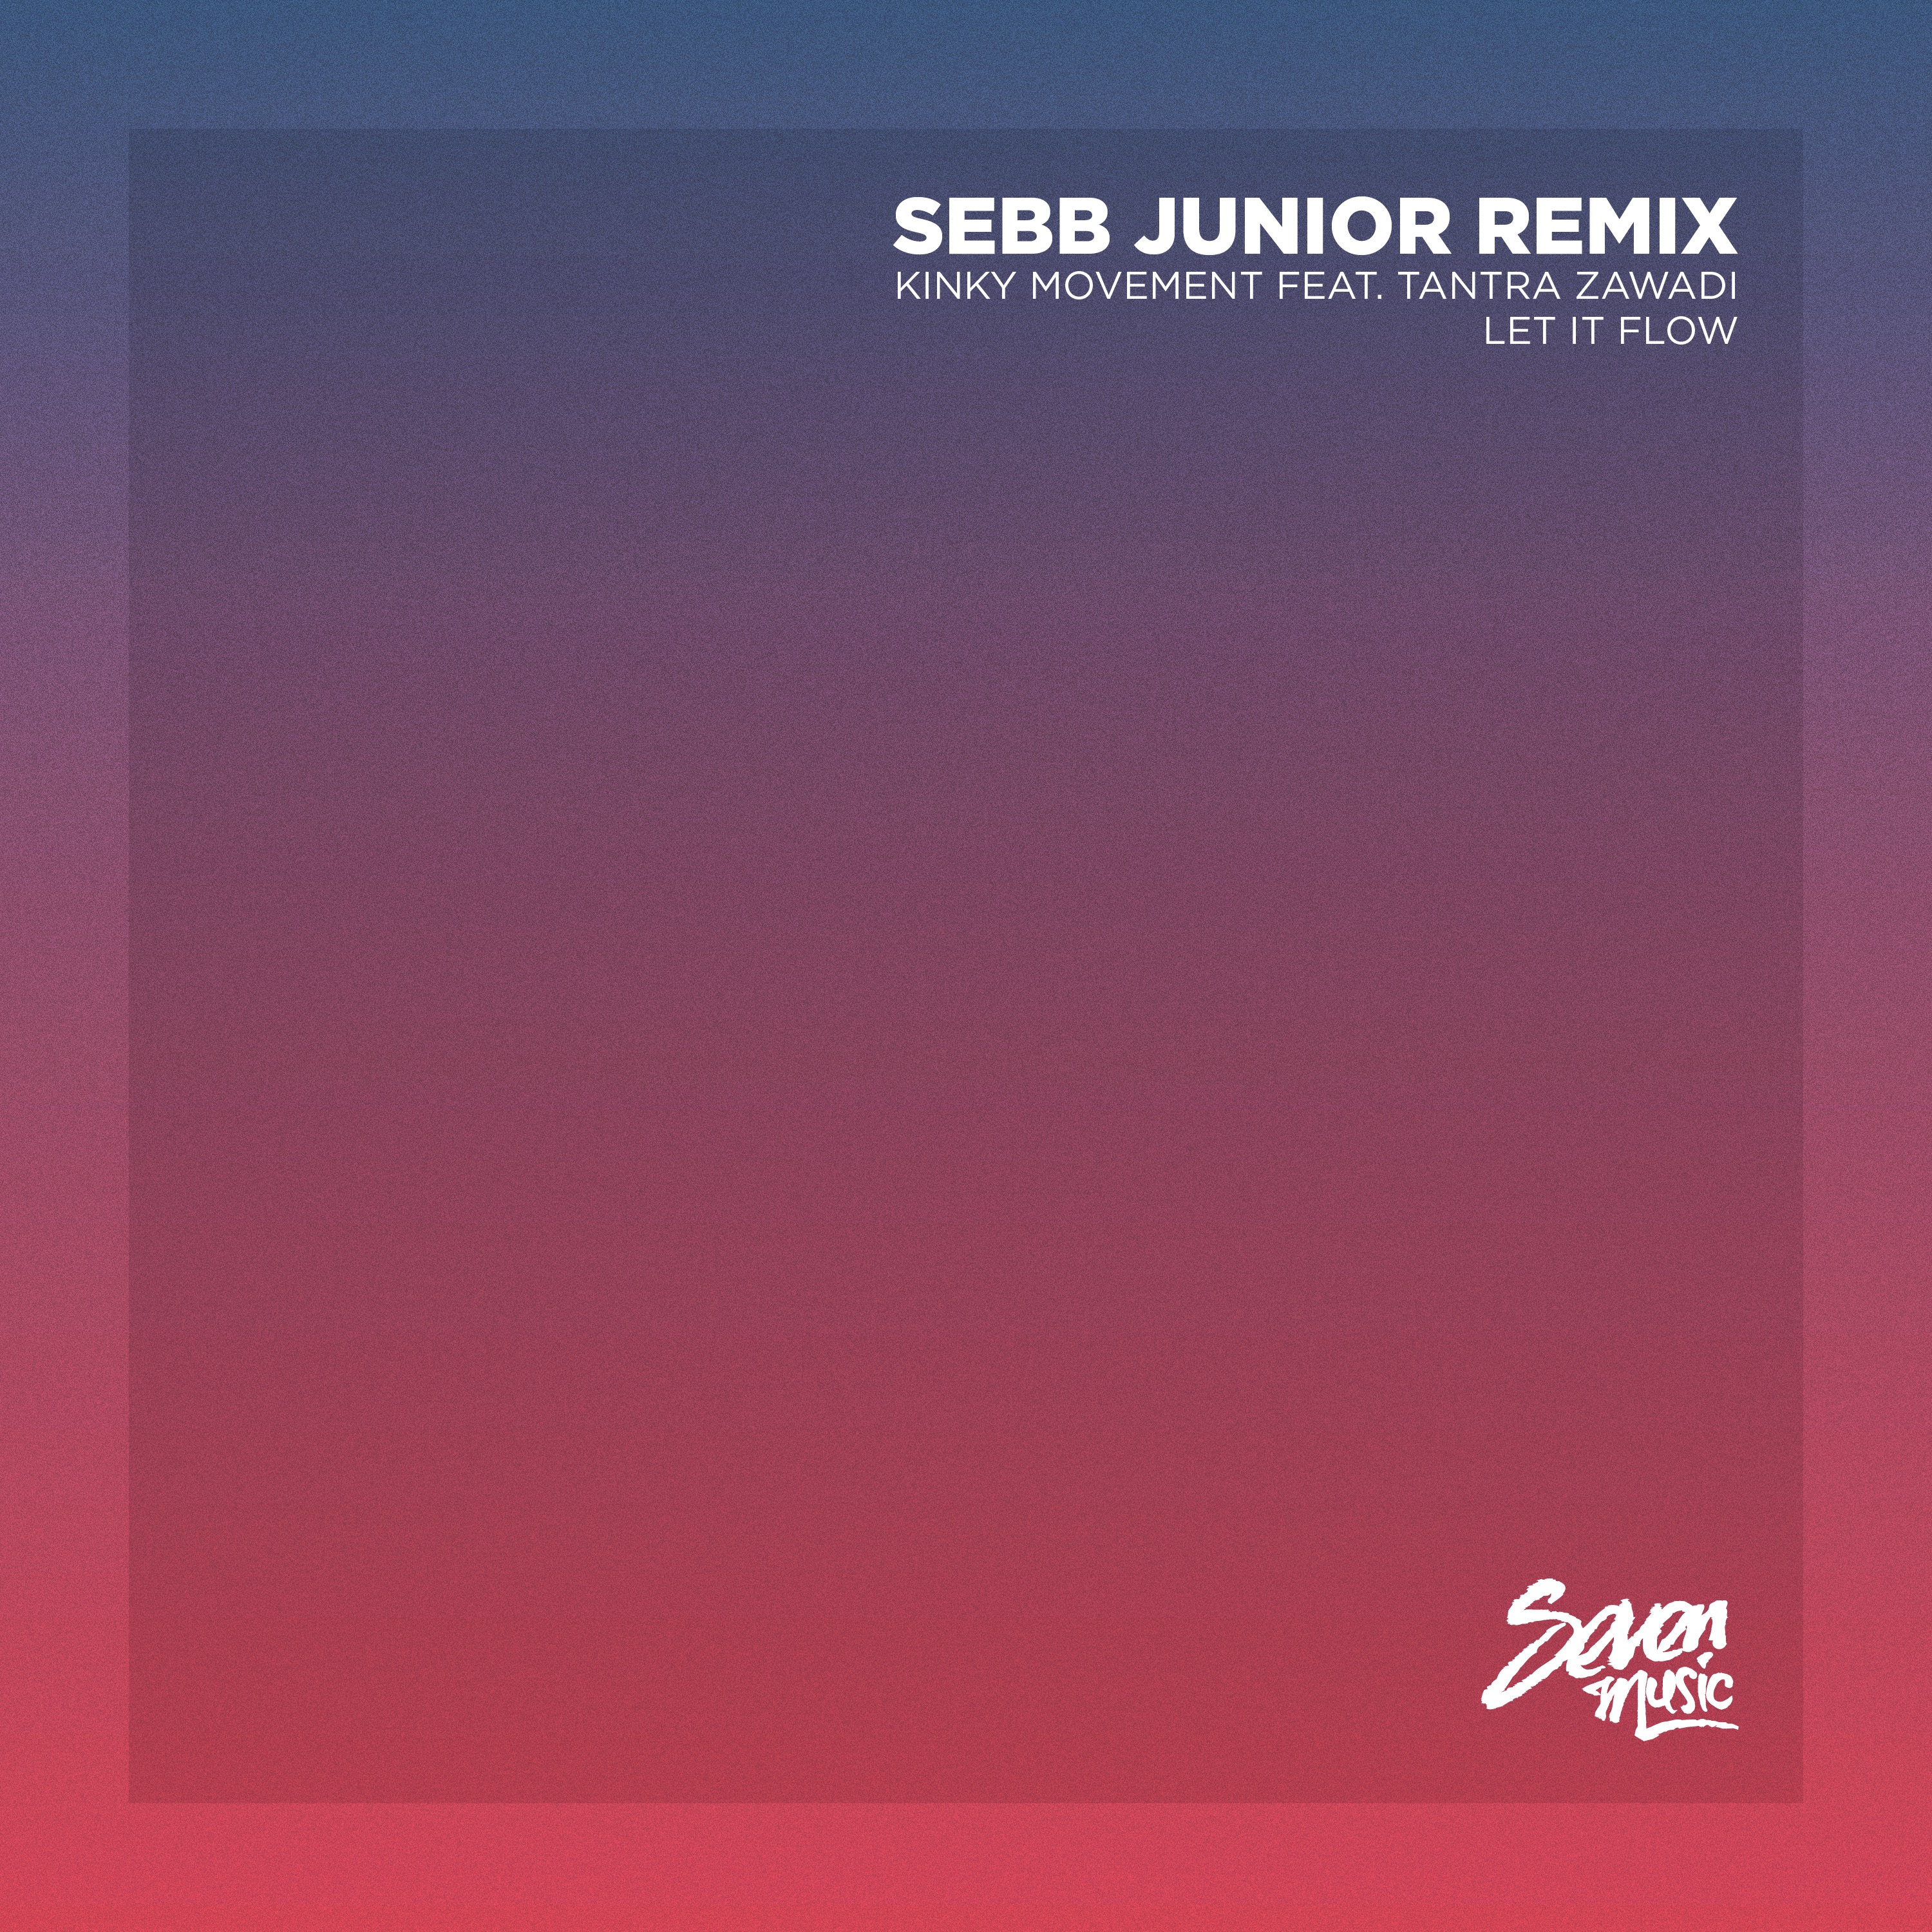 Ṣe igbasilẹ Premiere: Kinky Movement - Let It Flow (Sebb Junior Remix) - Seven Music